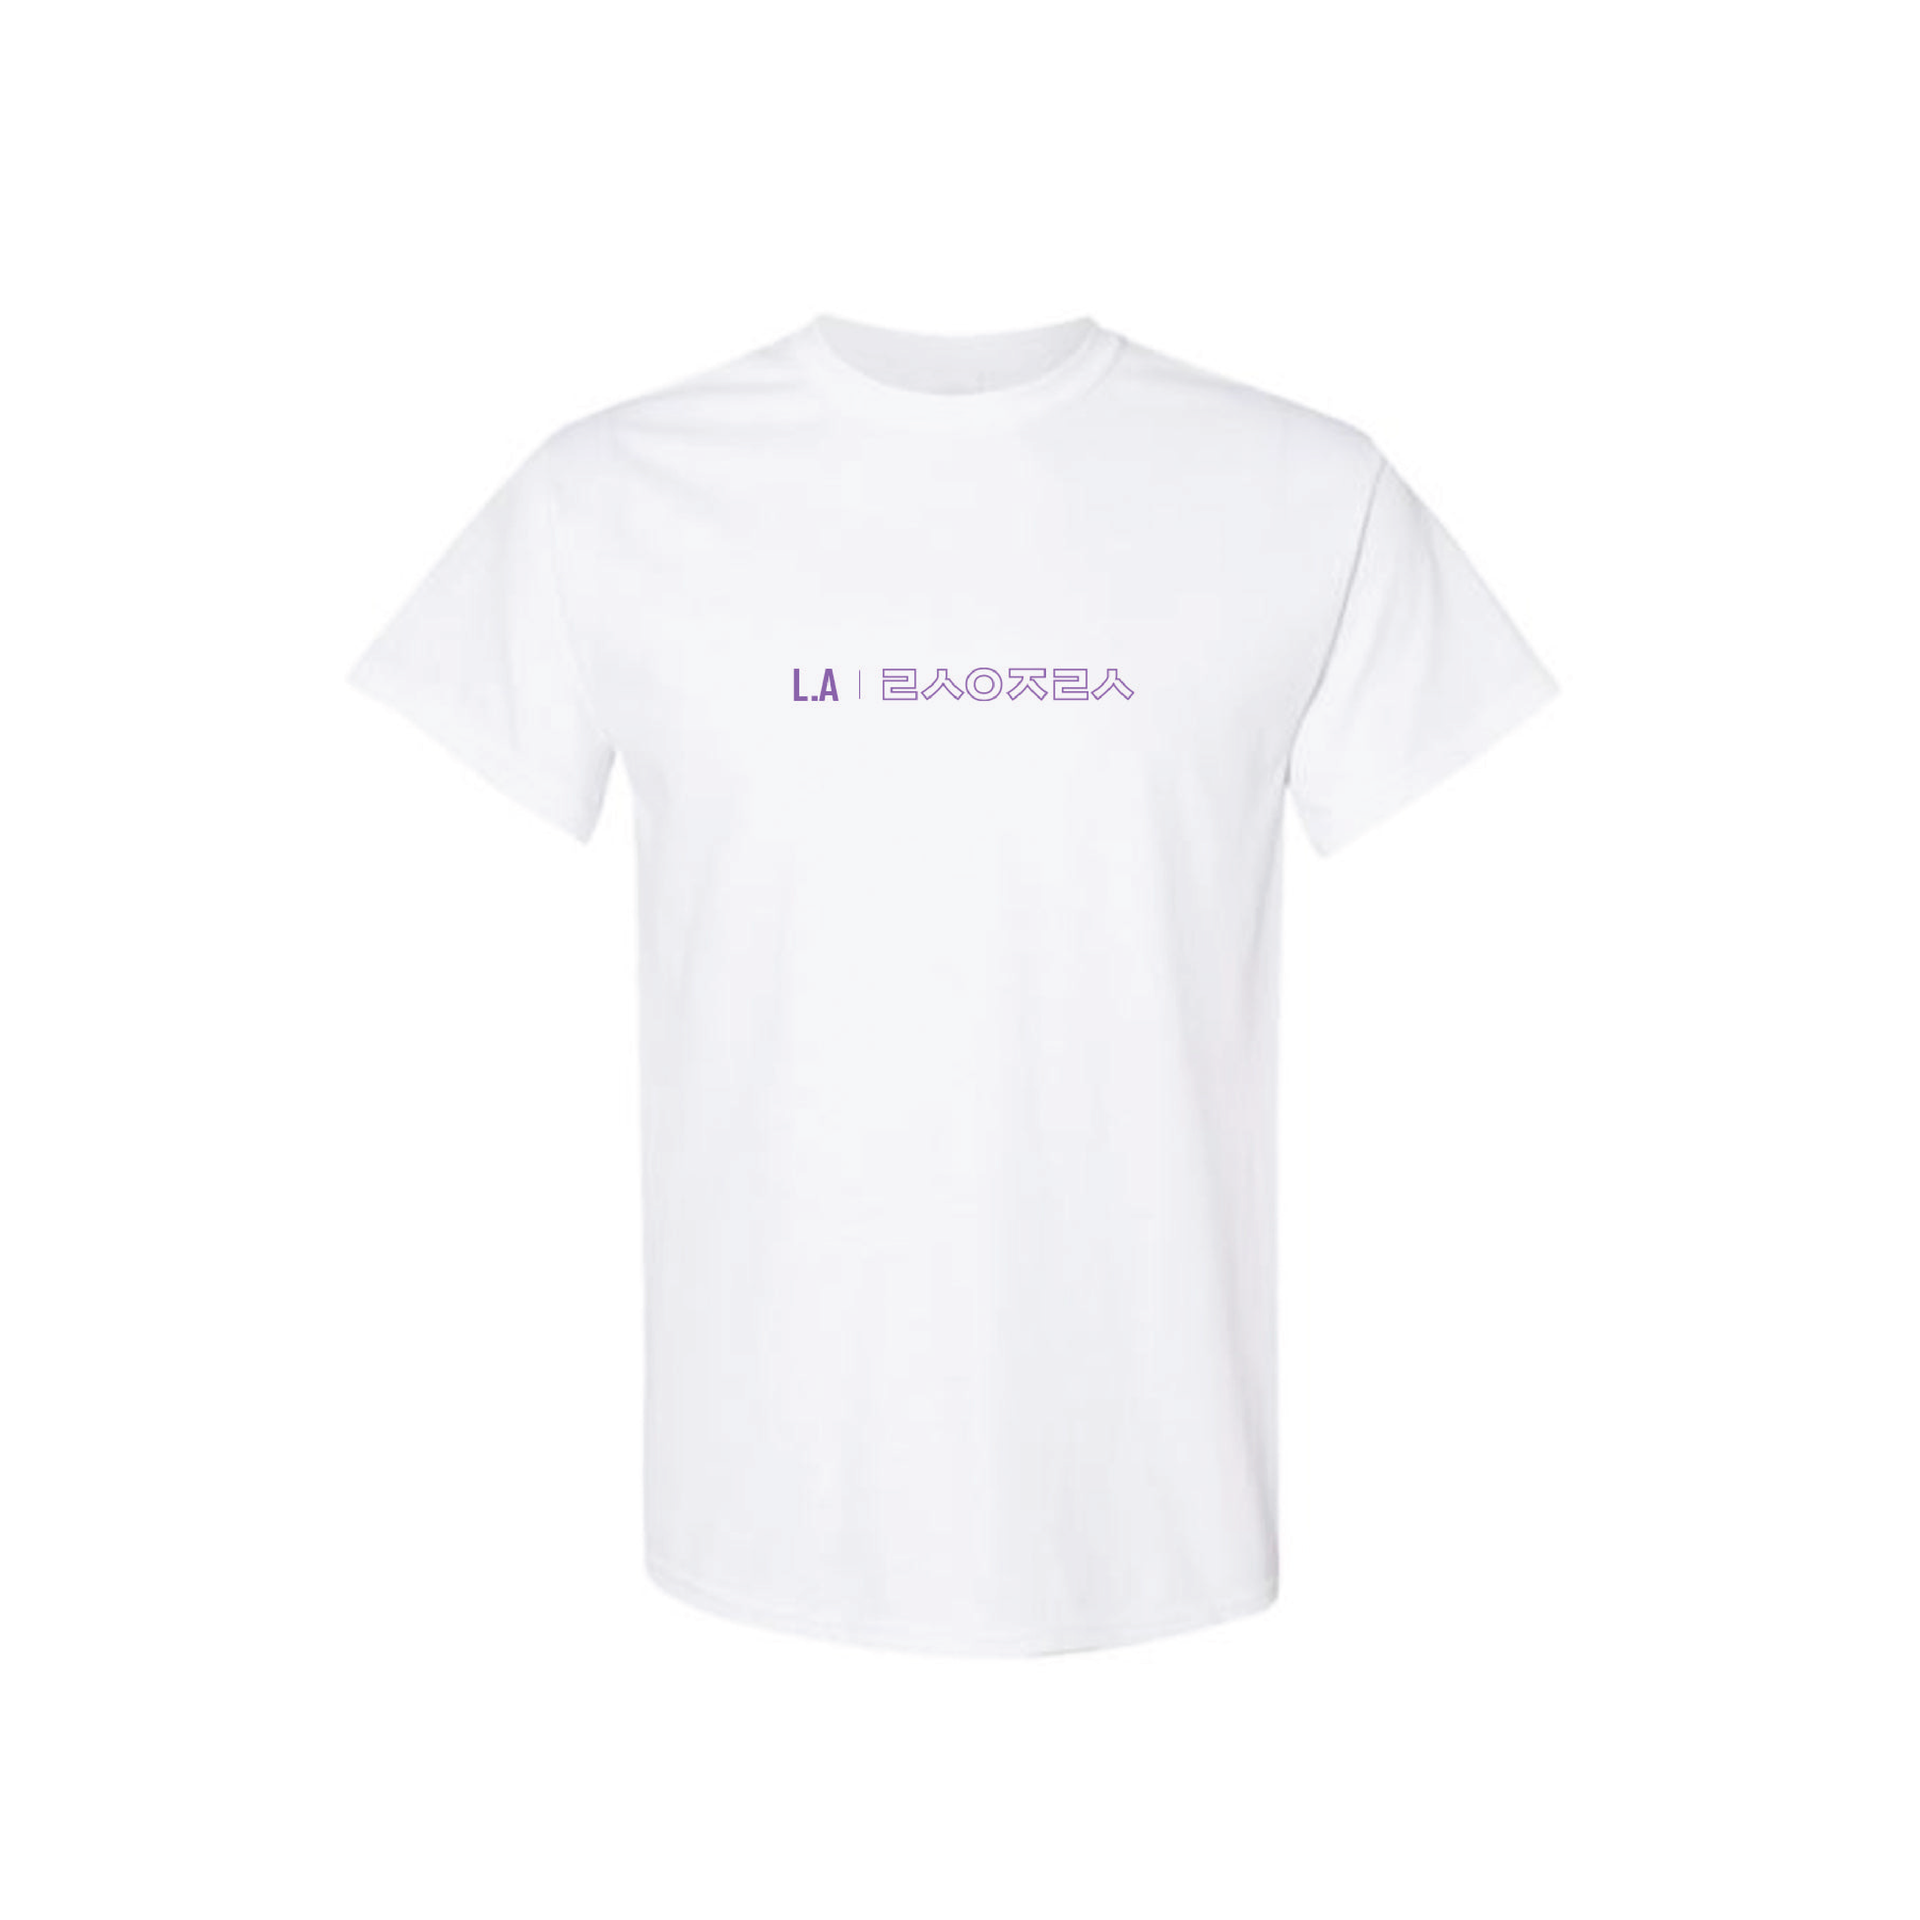 BTS - SPACE OF BTS in LA S/S T-shirt (White)